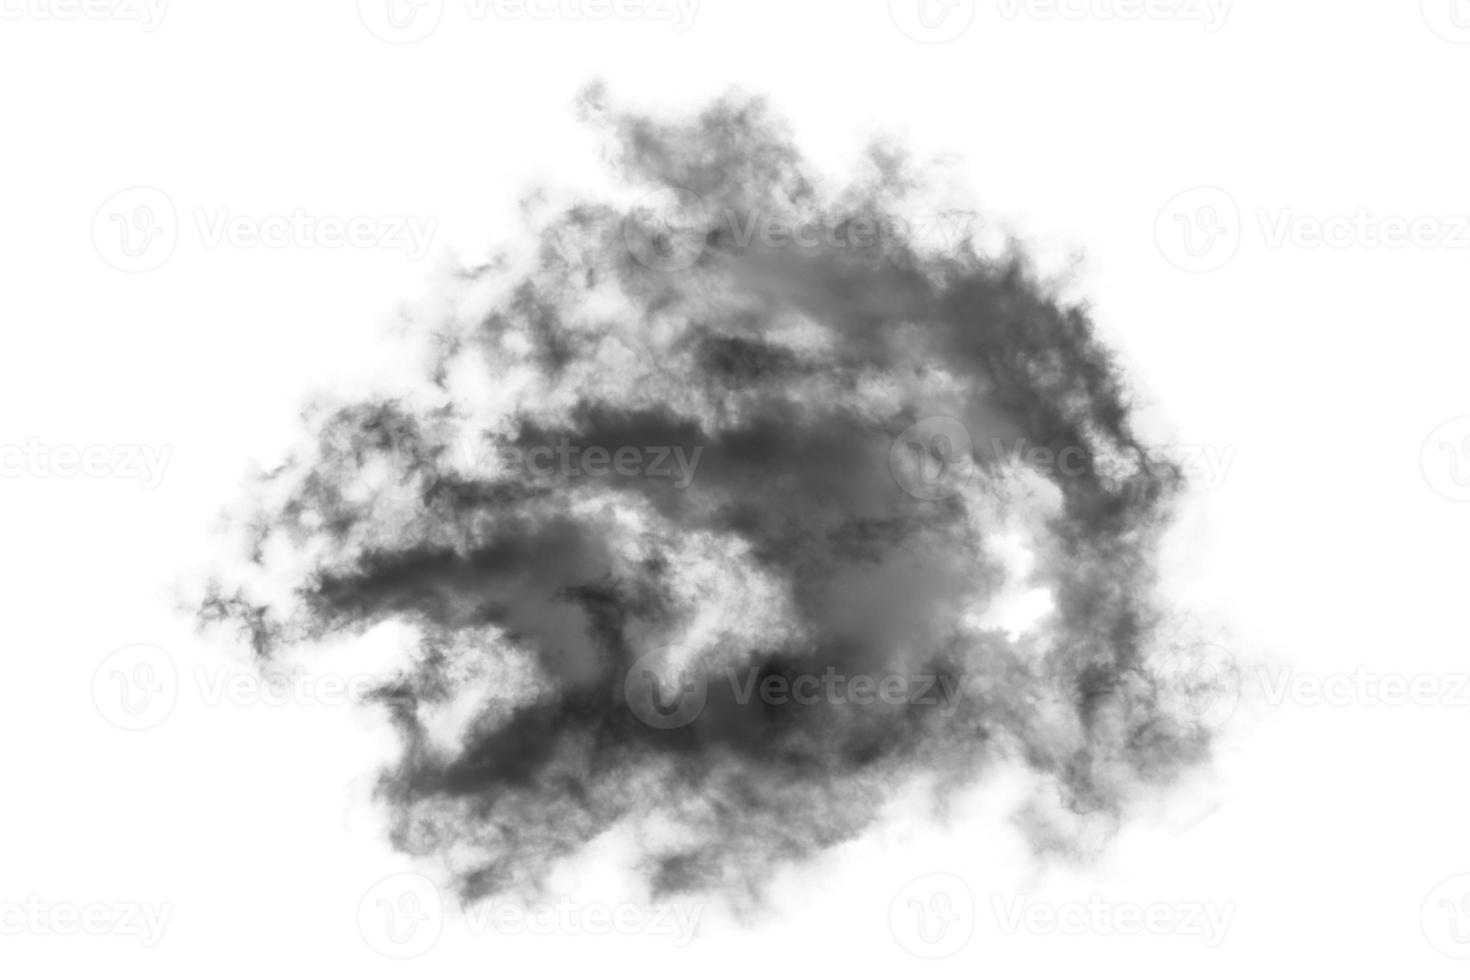 fumaça texturizada, preto abstrato, isolado no fundo branco foto